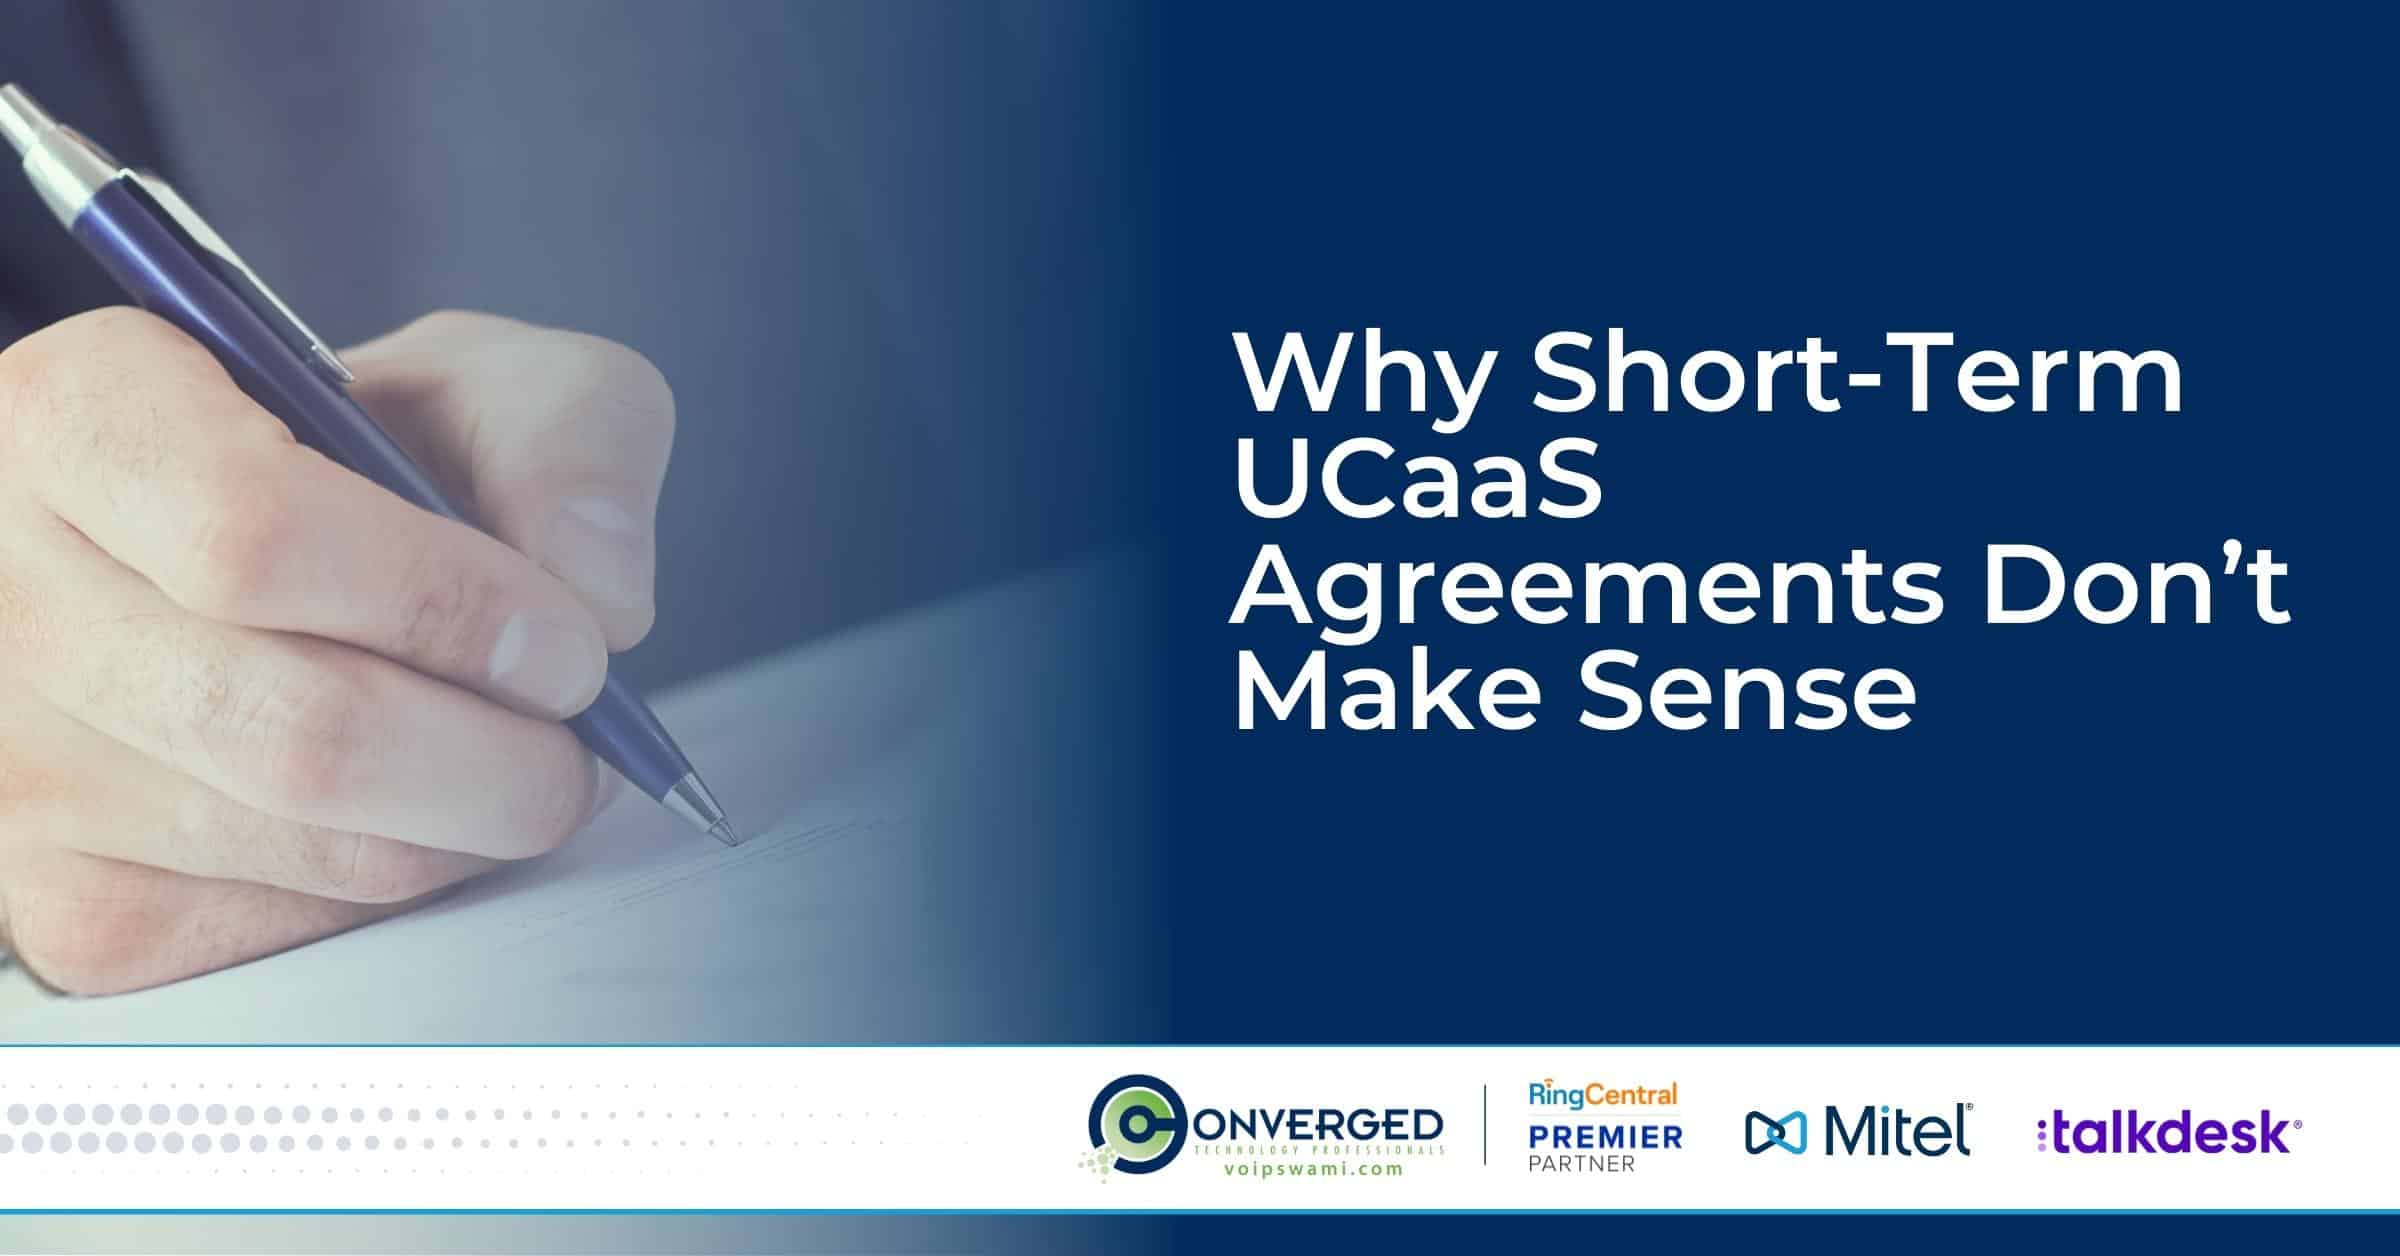 Why Short-Term UCaaS Agreements Don’t Make Sense